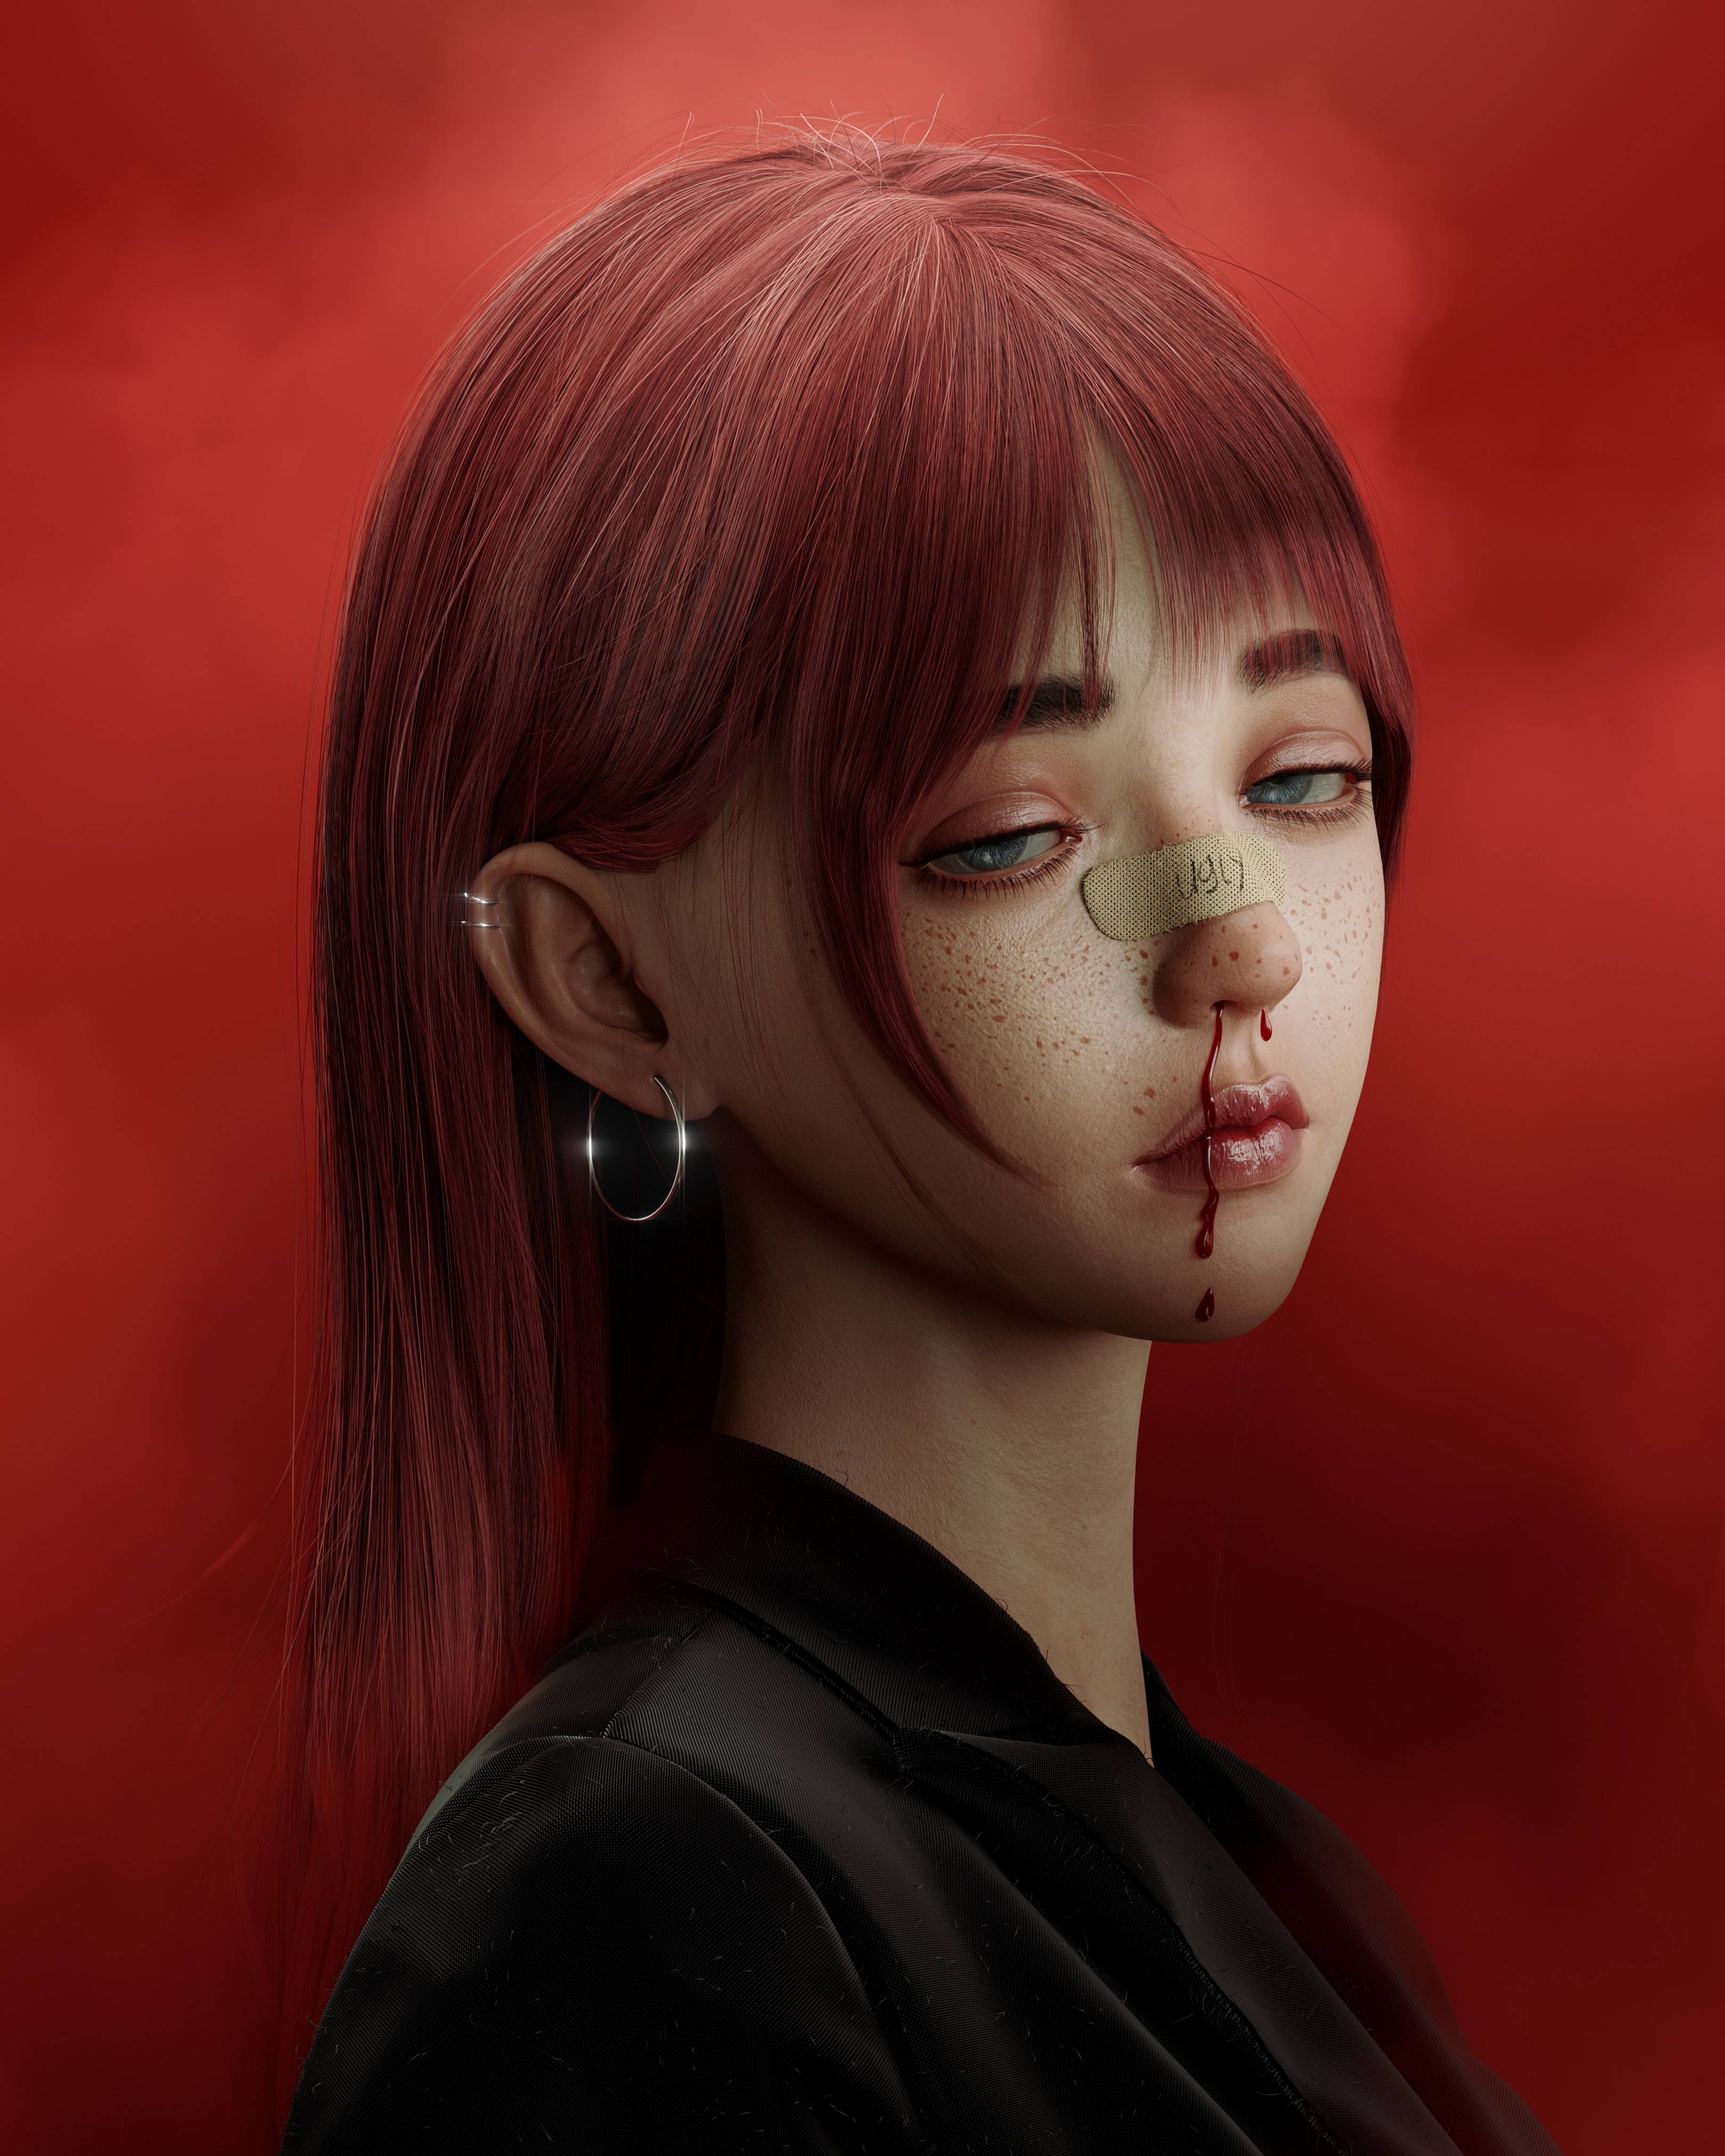 General 3240x4050 yuga digital art artwork illustration women portrait simple background blood earring redhead